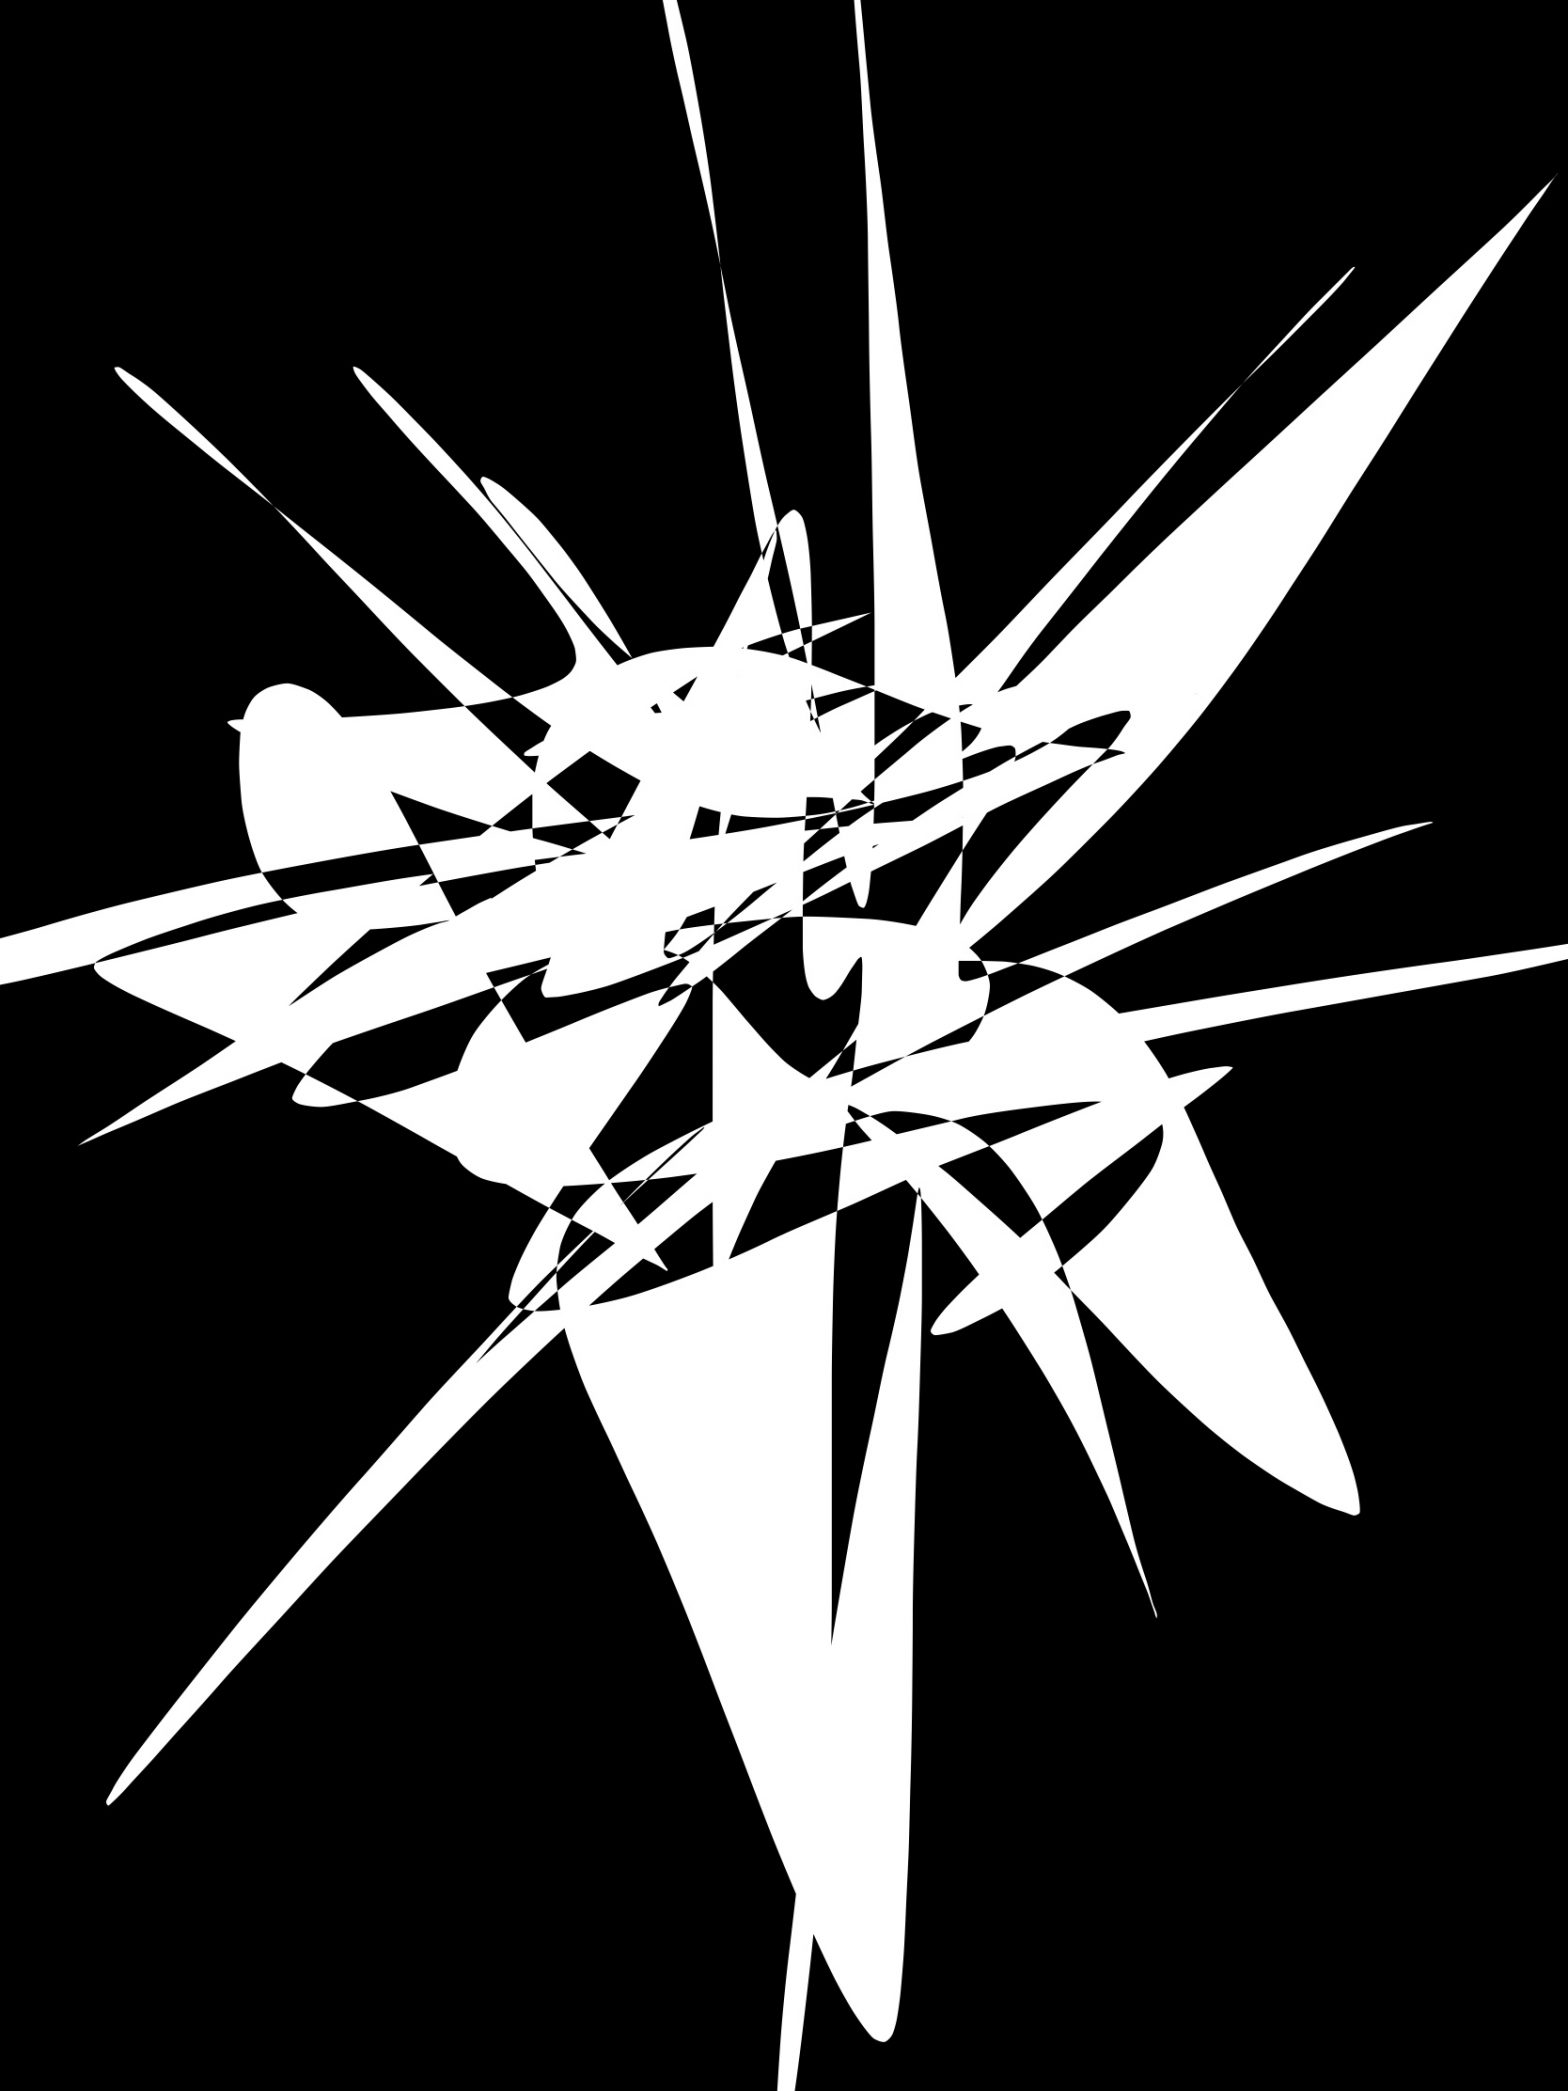 black white abstract explosion ERIC KIM